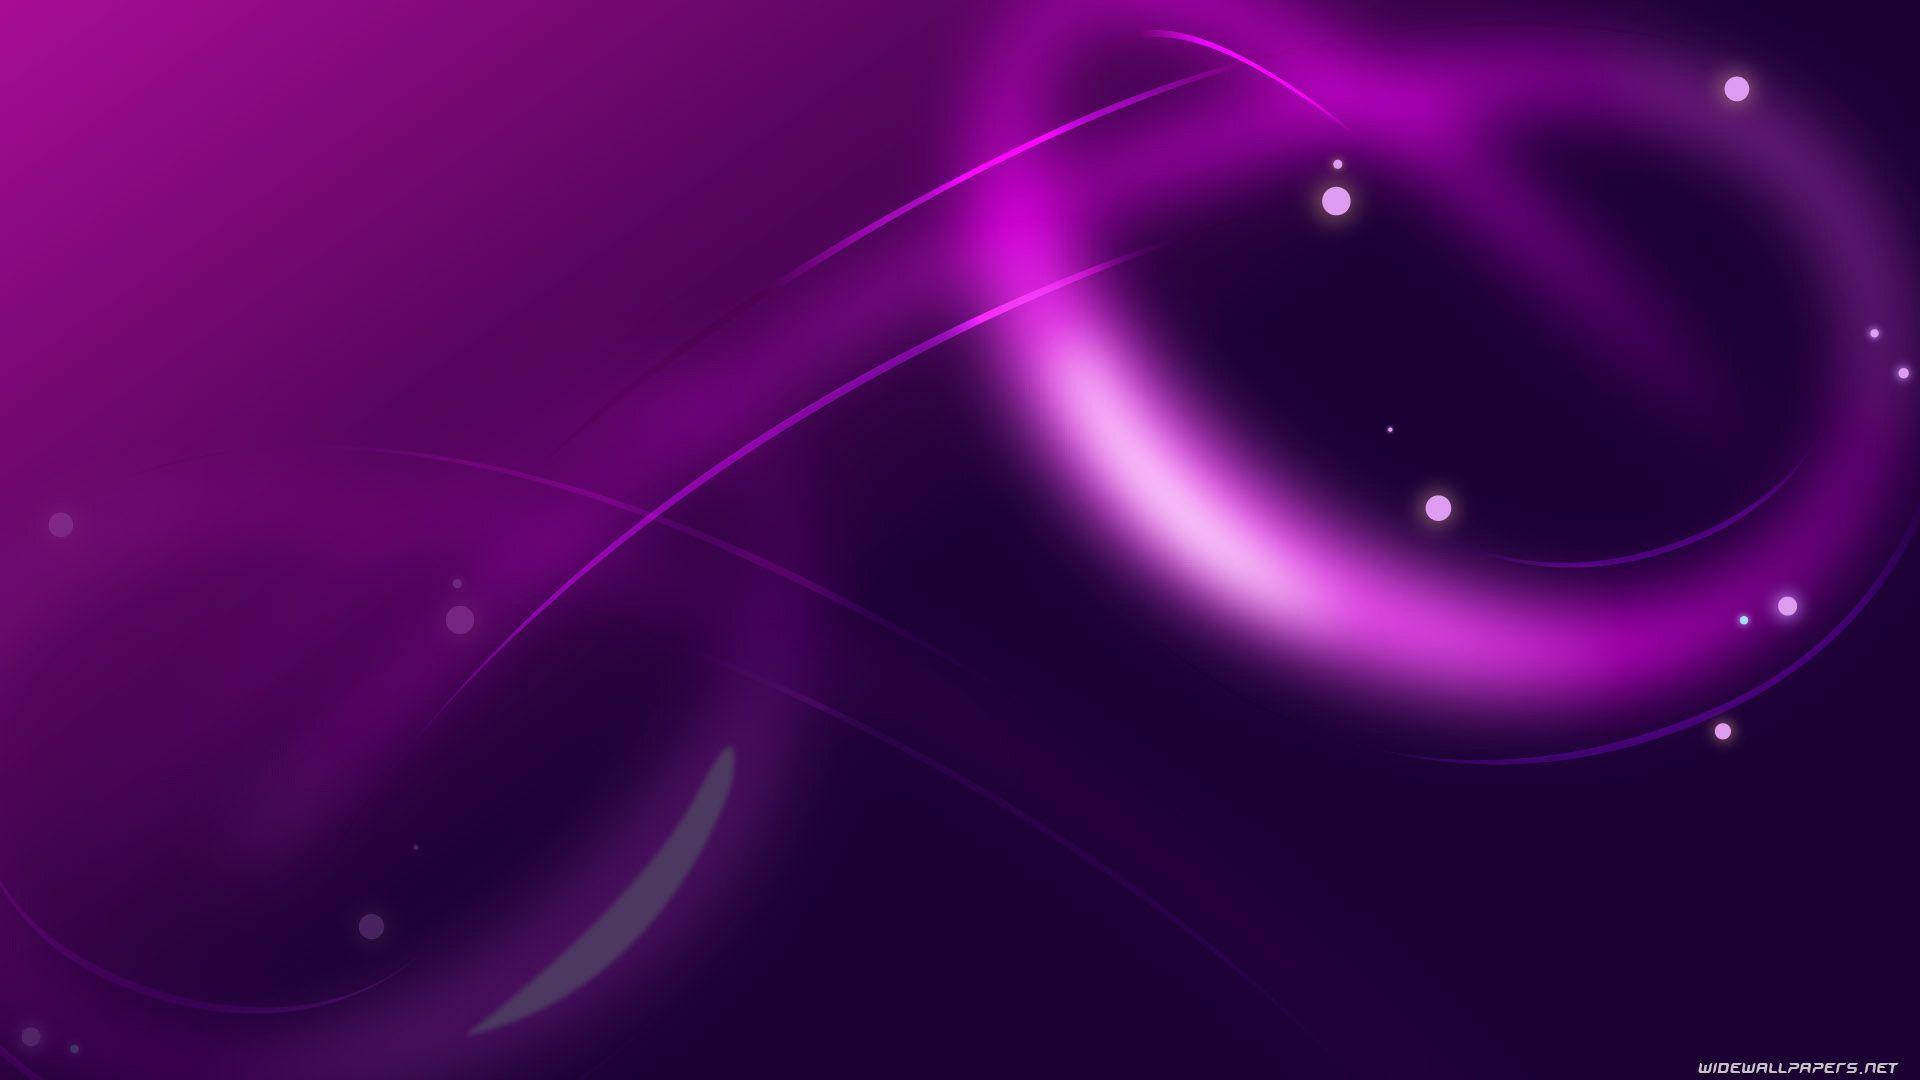 Dark Purple Abstract Background Image 6 HD Wallpapercom